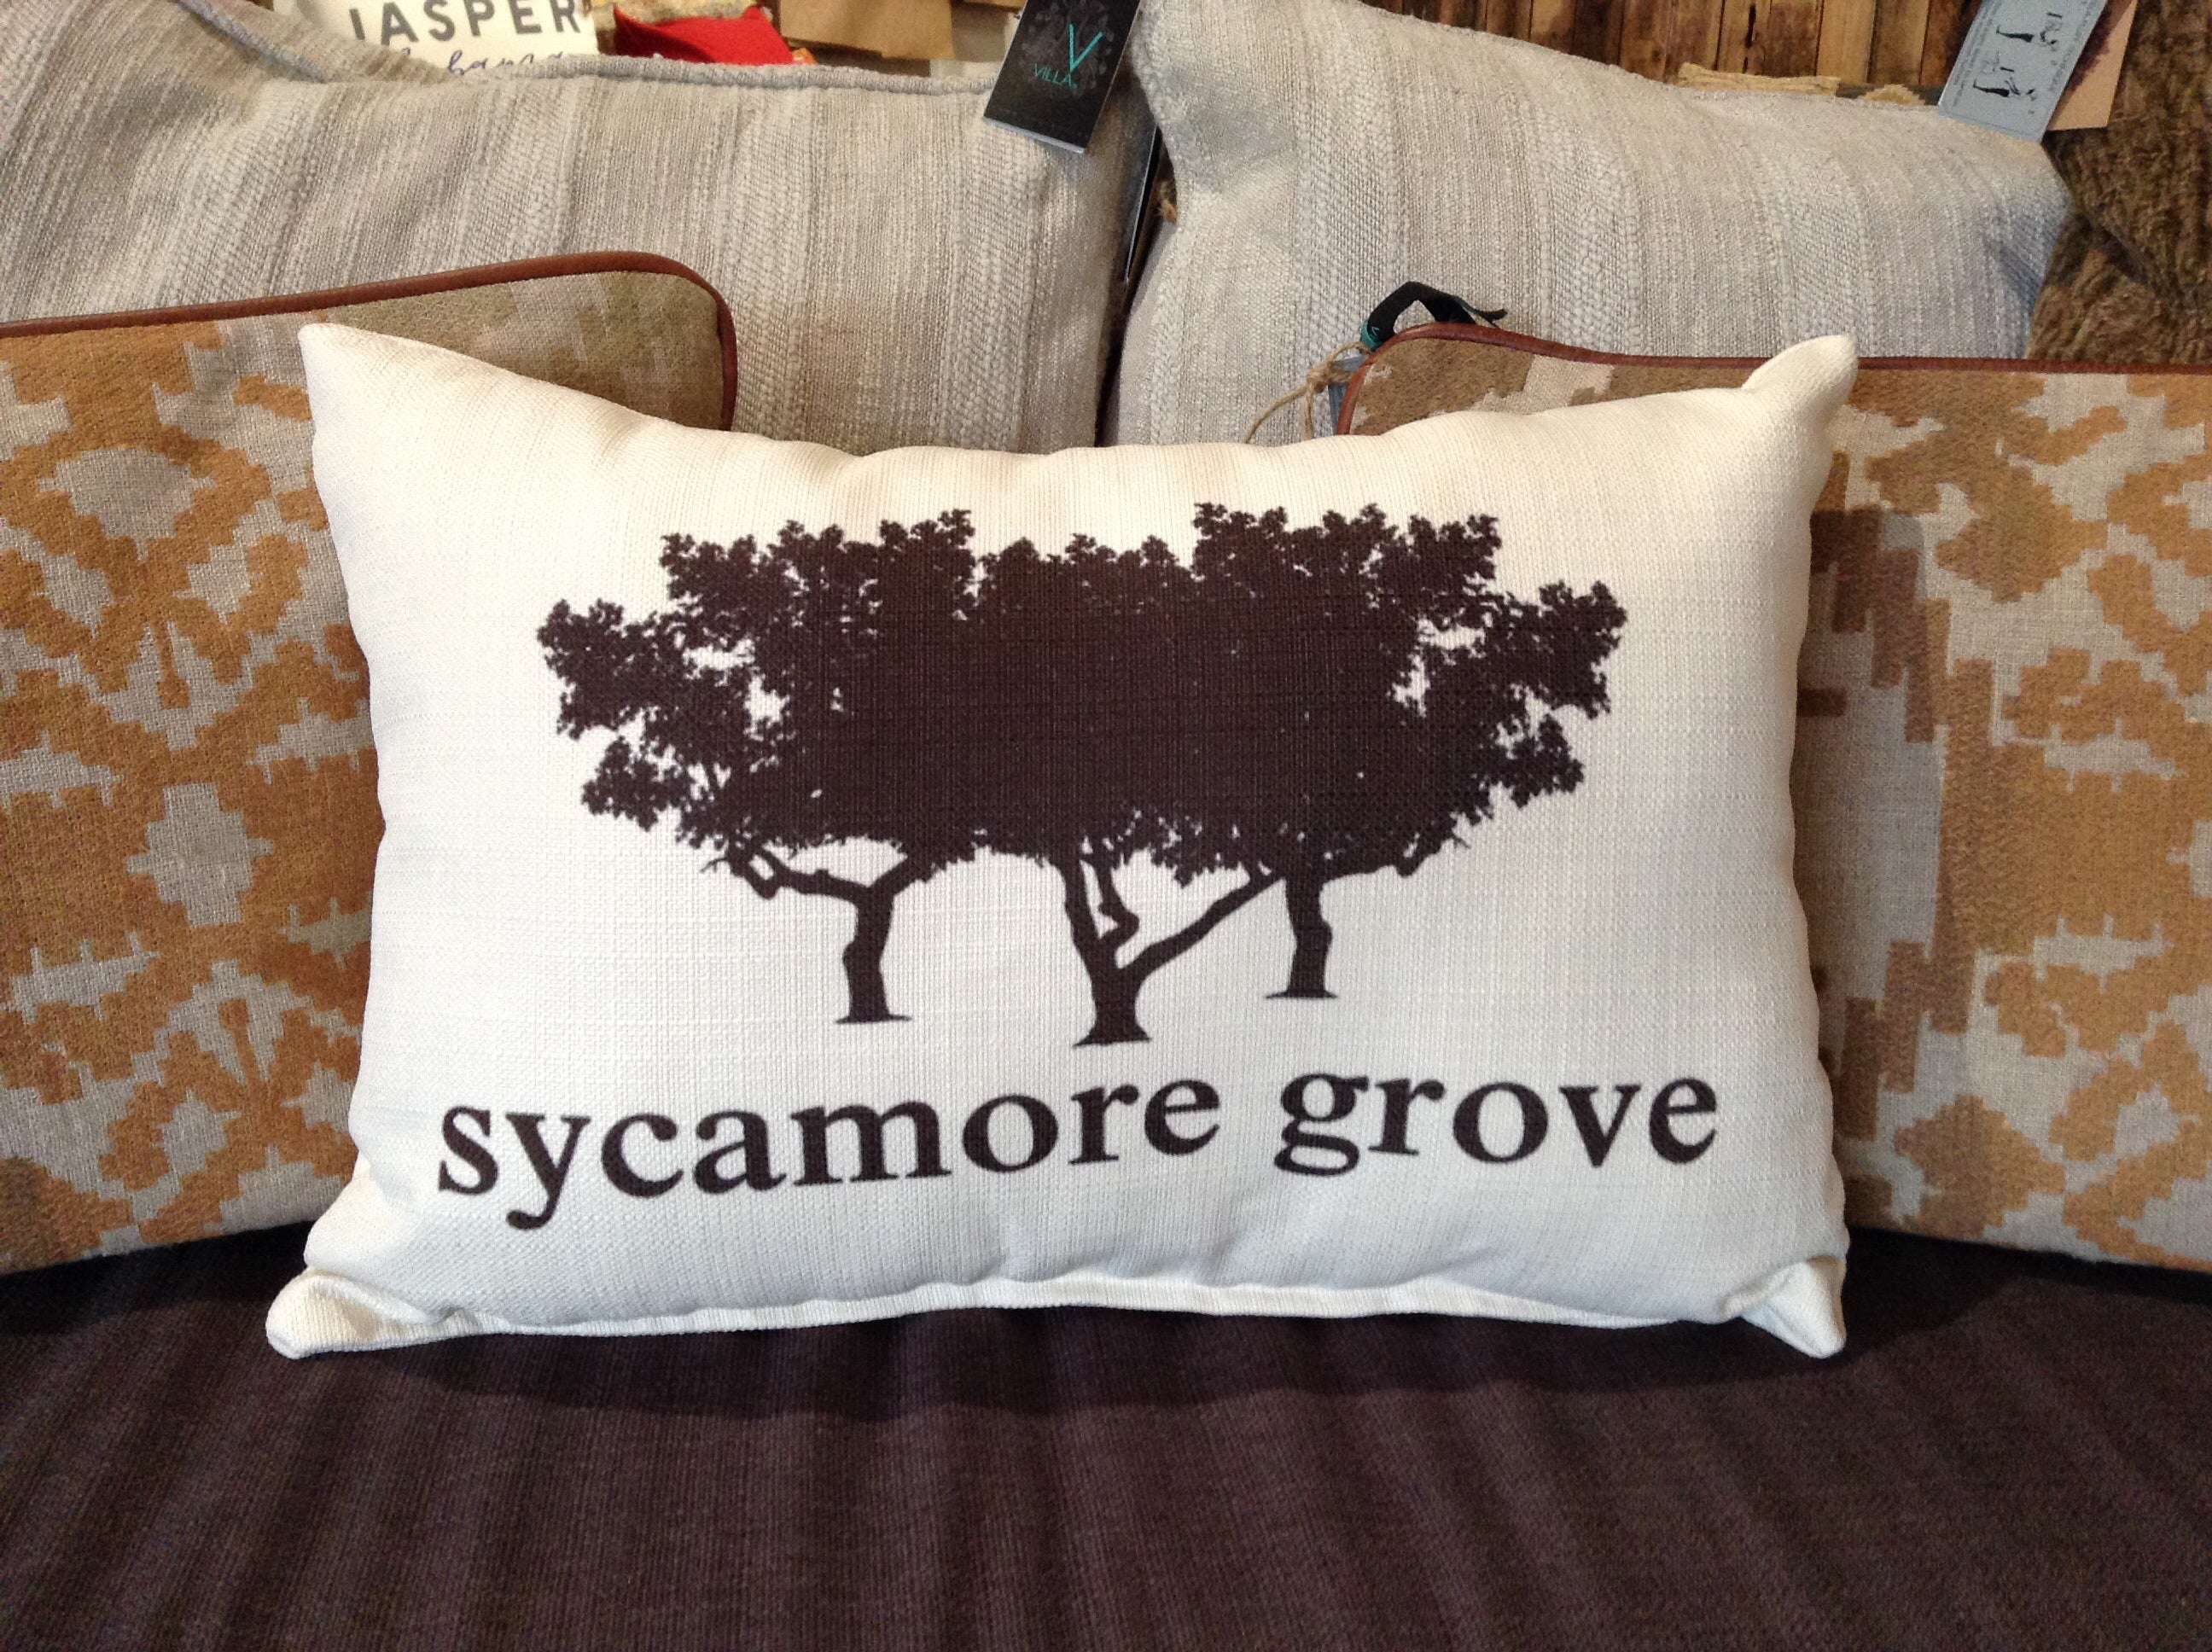 Sycamore grove pillow